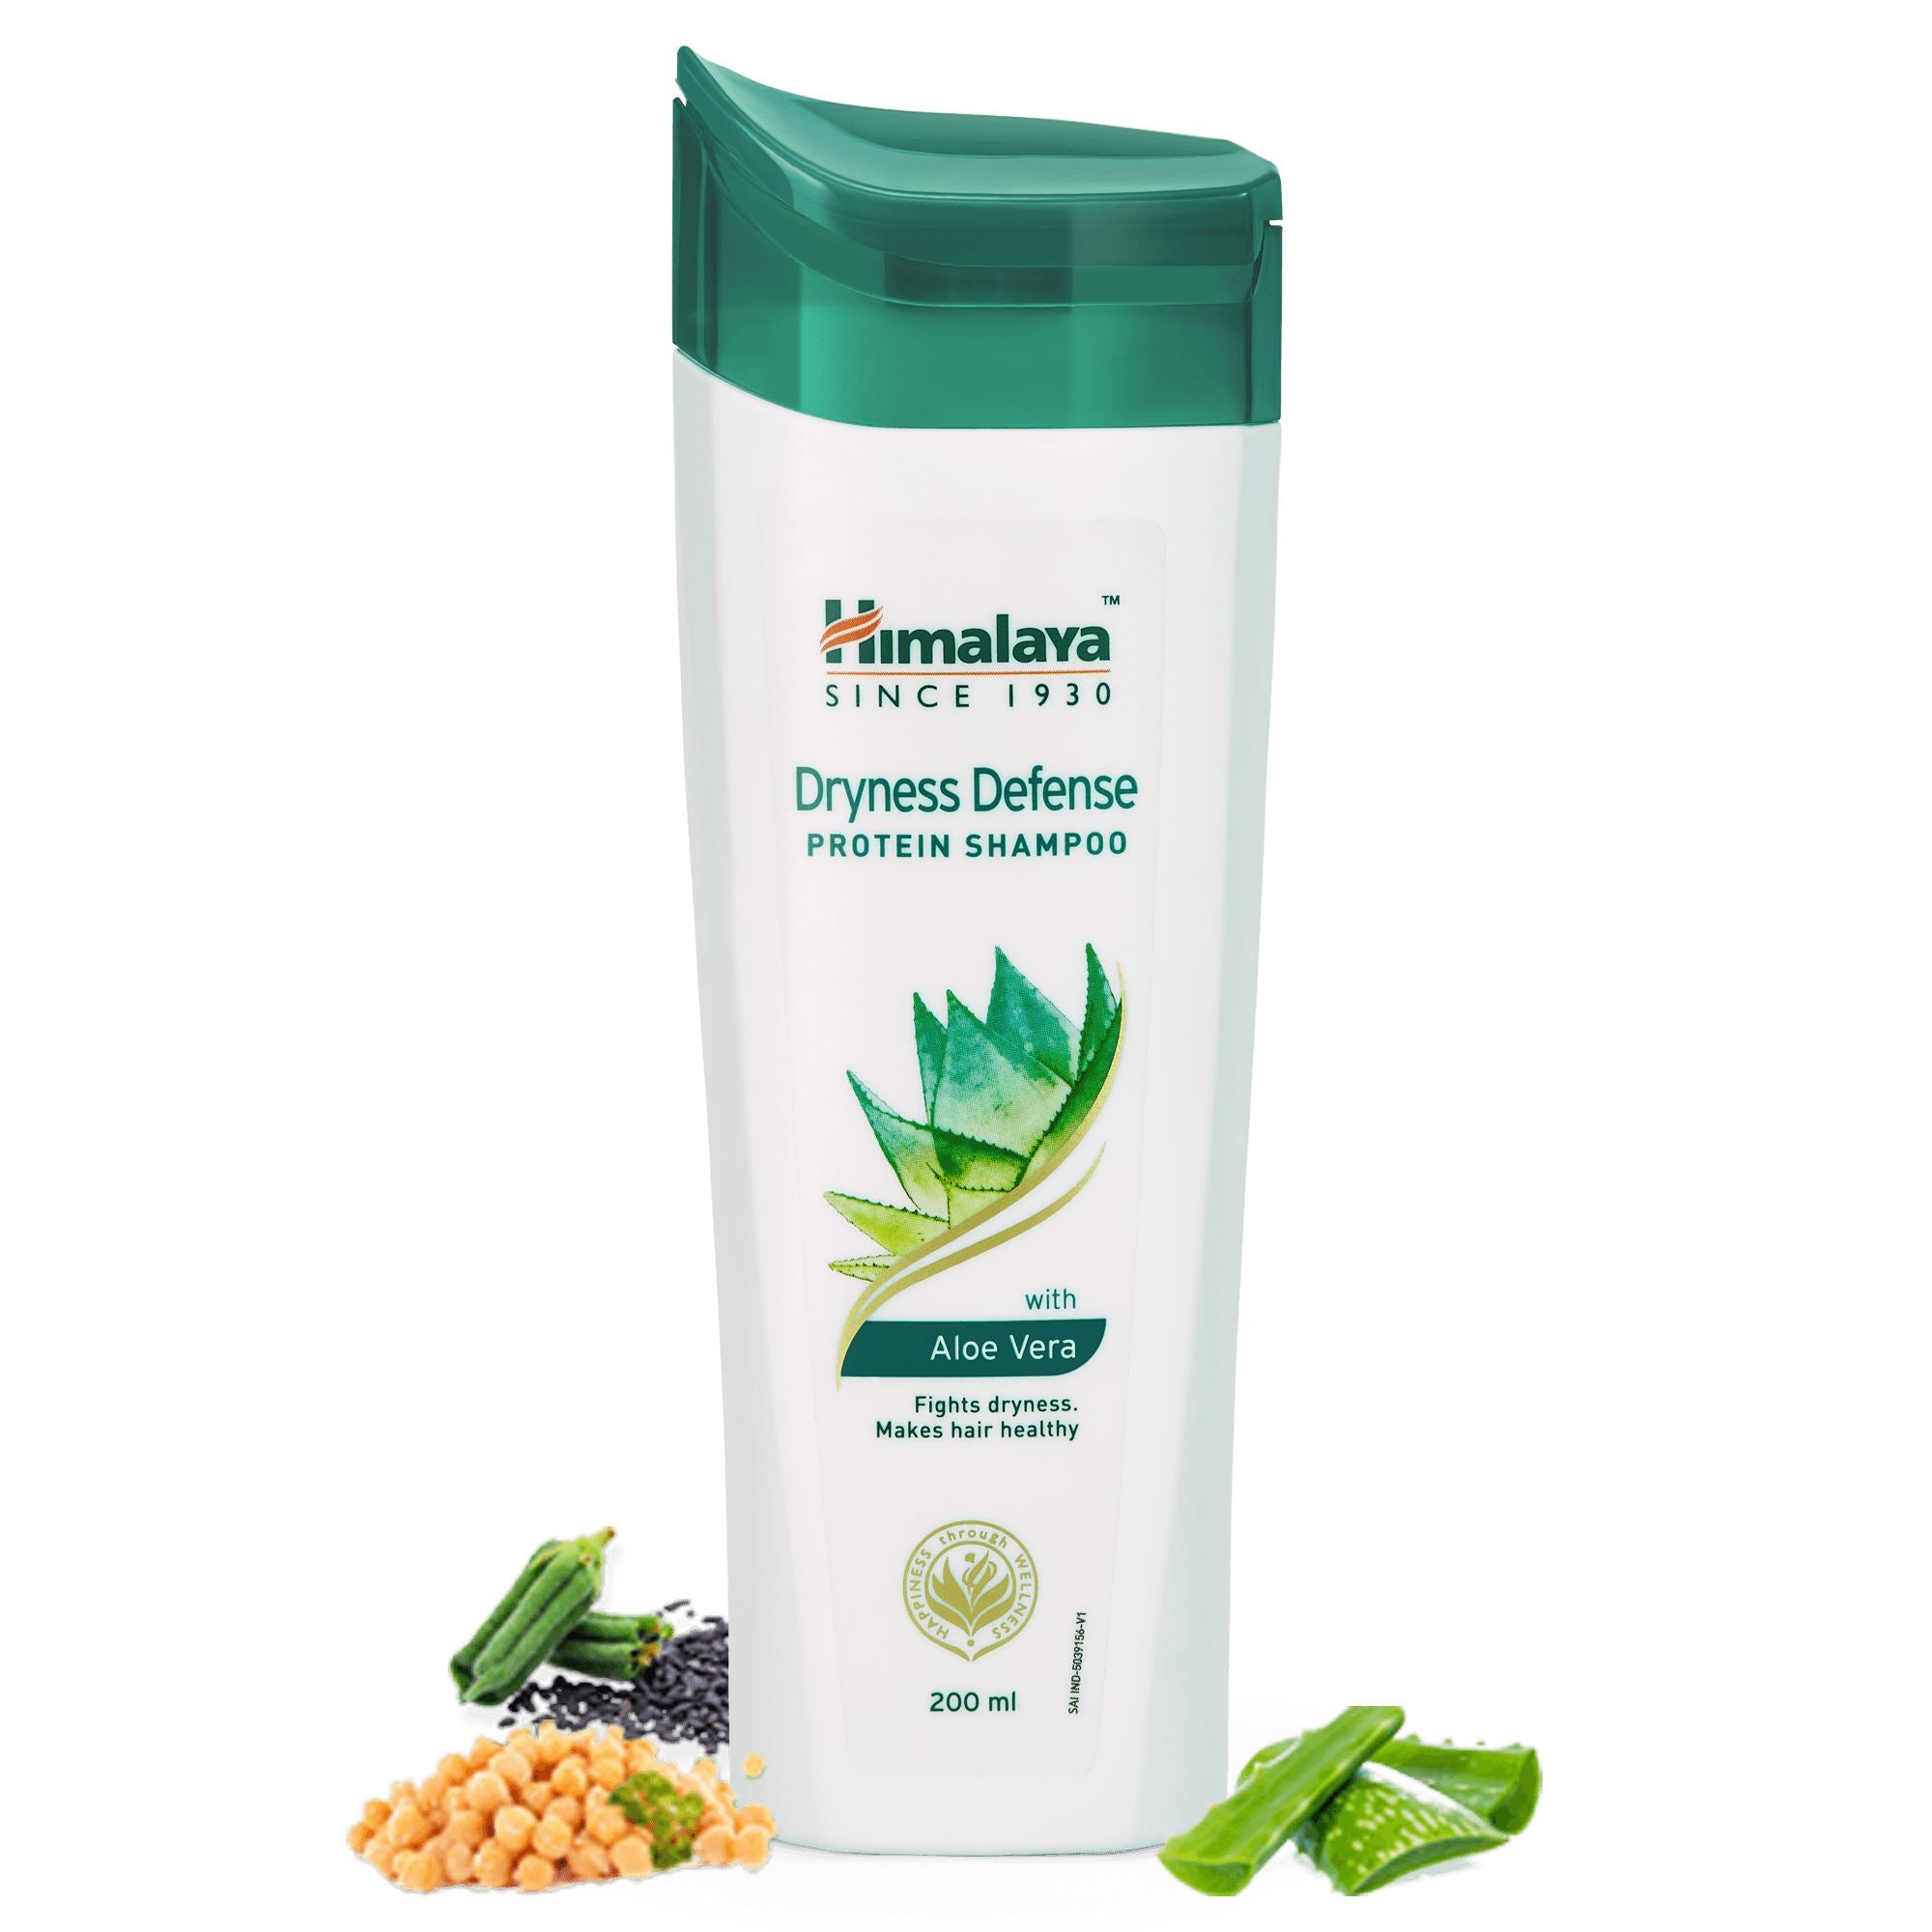 Himalaya Dryness Defense Protein Shampoo 200ml - Fights dryness, makes hair healthy